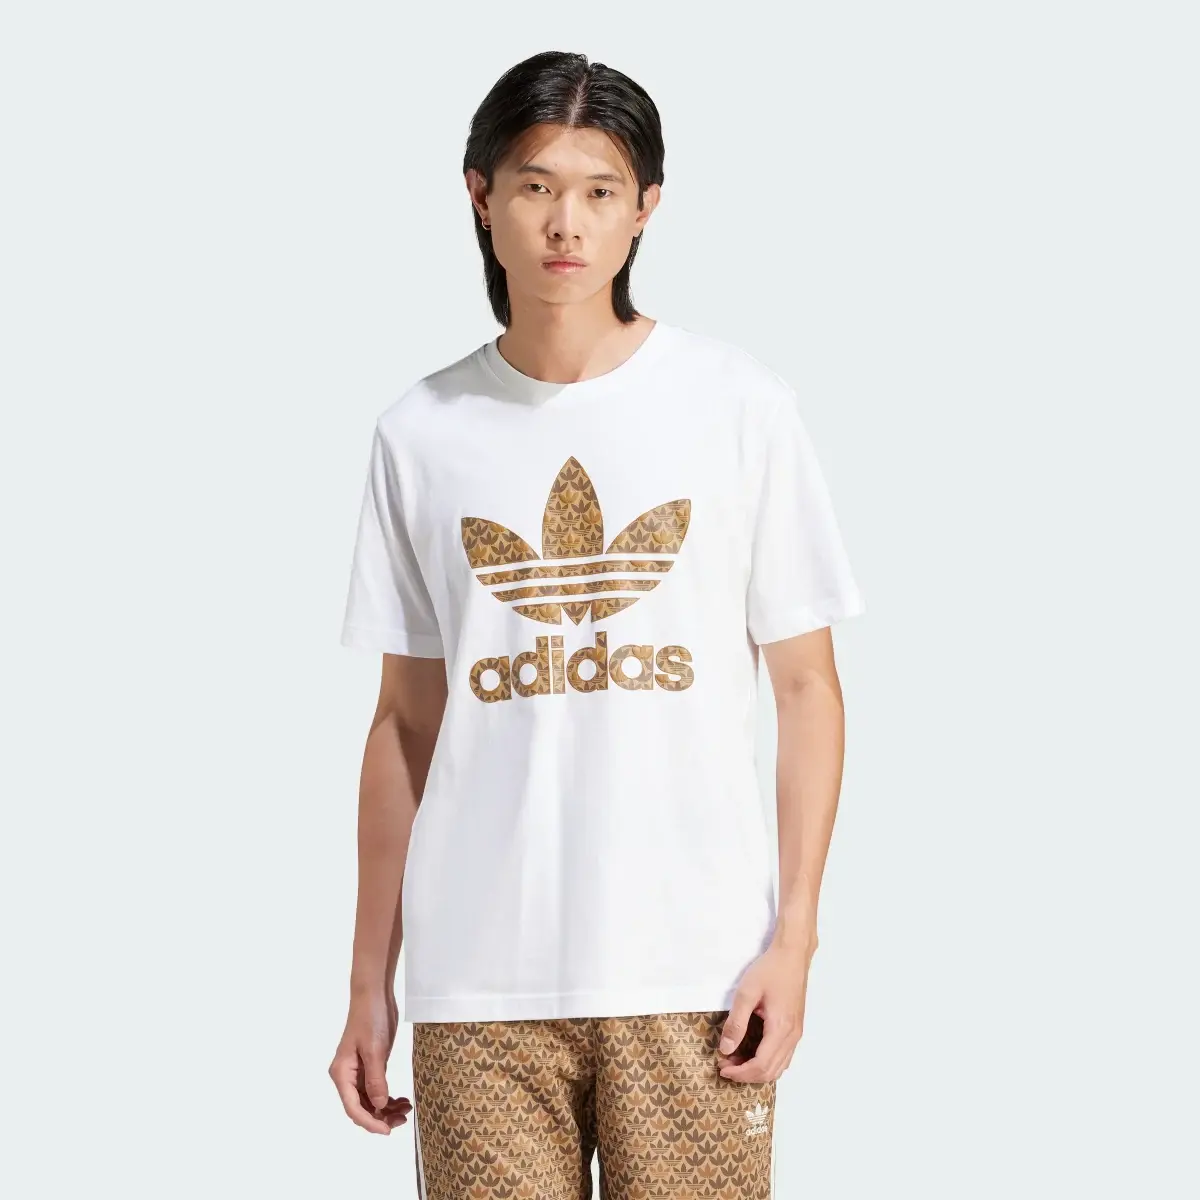 Adidas T-shirt Clássica. 2